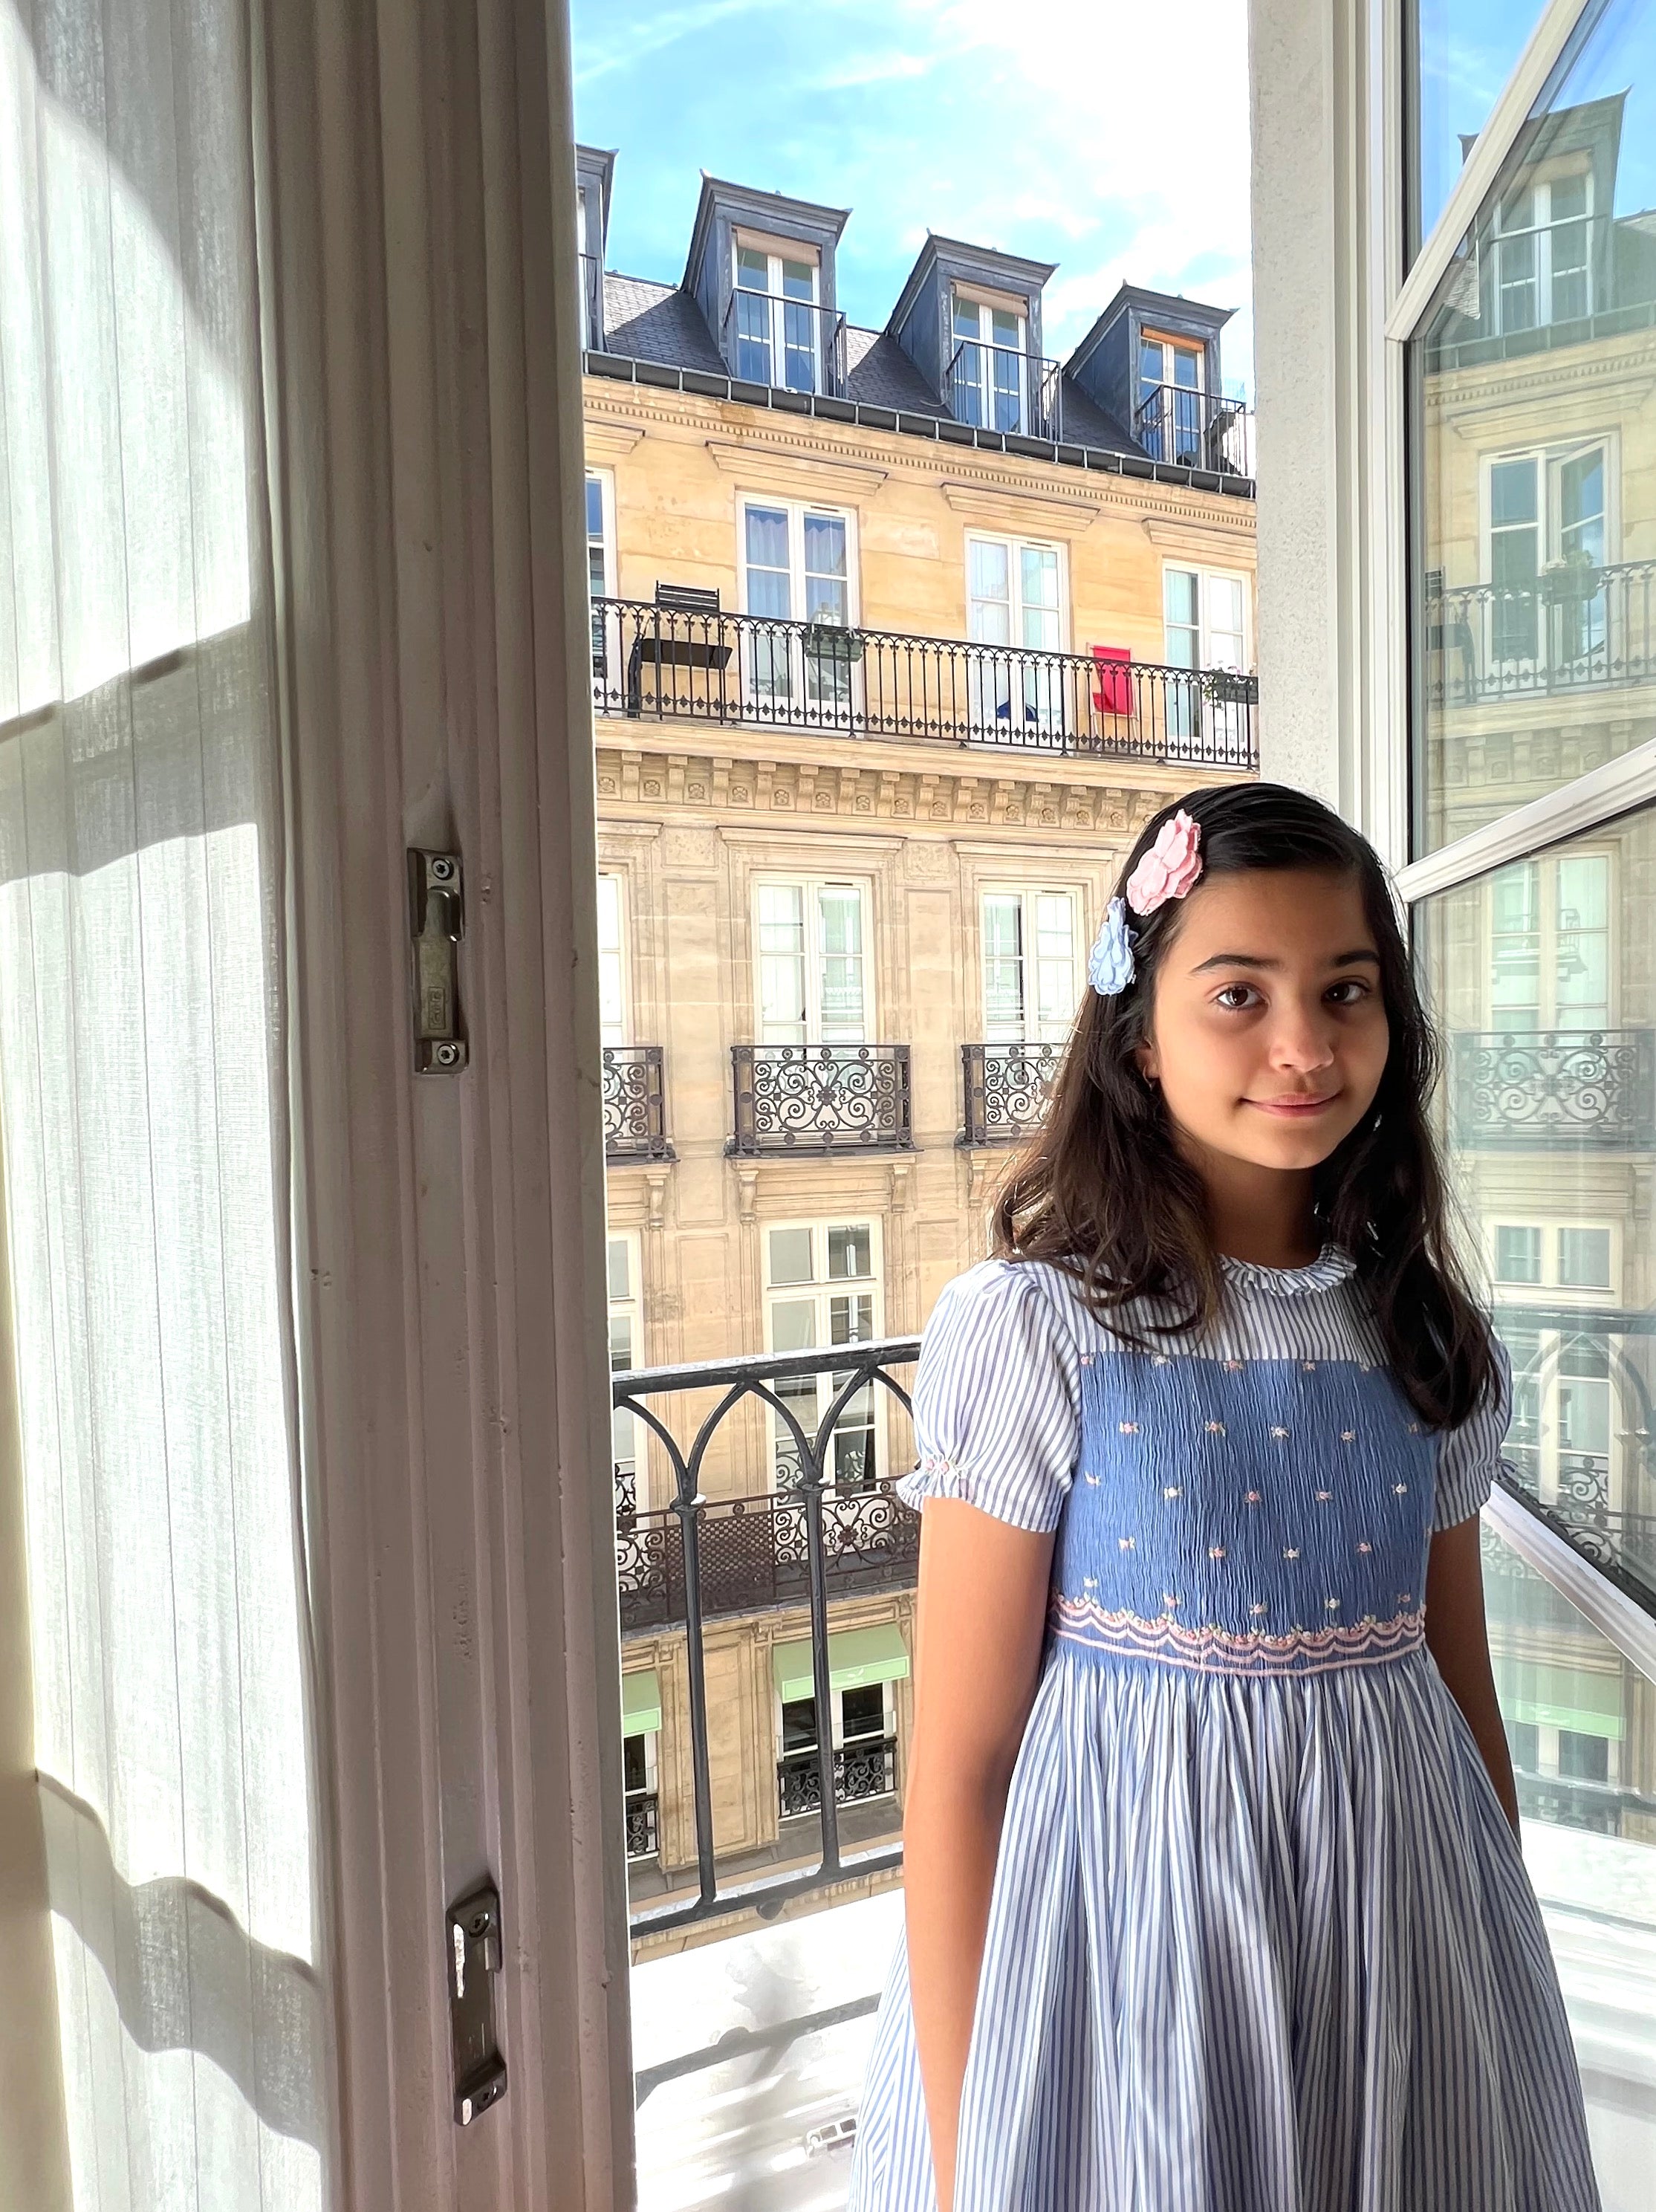 Children's boutique in Paris - Dresses for girls - Visiting Paris as a family